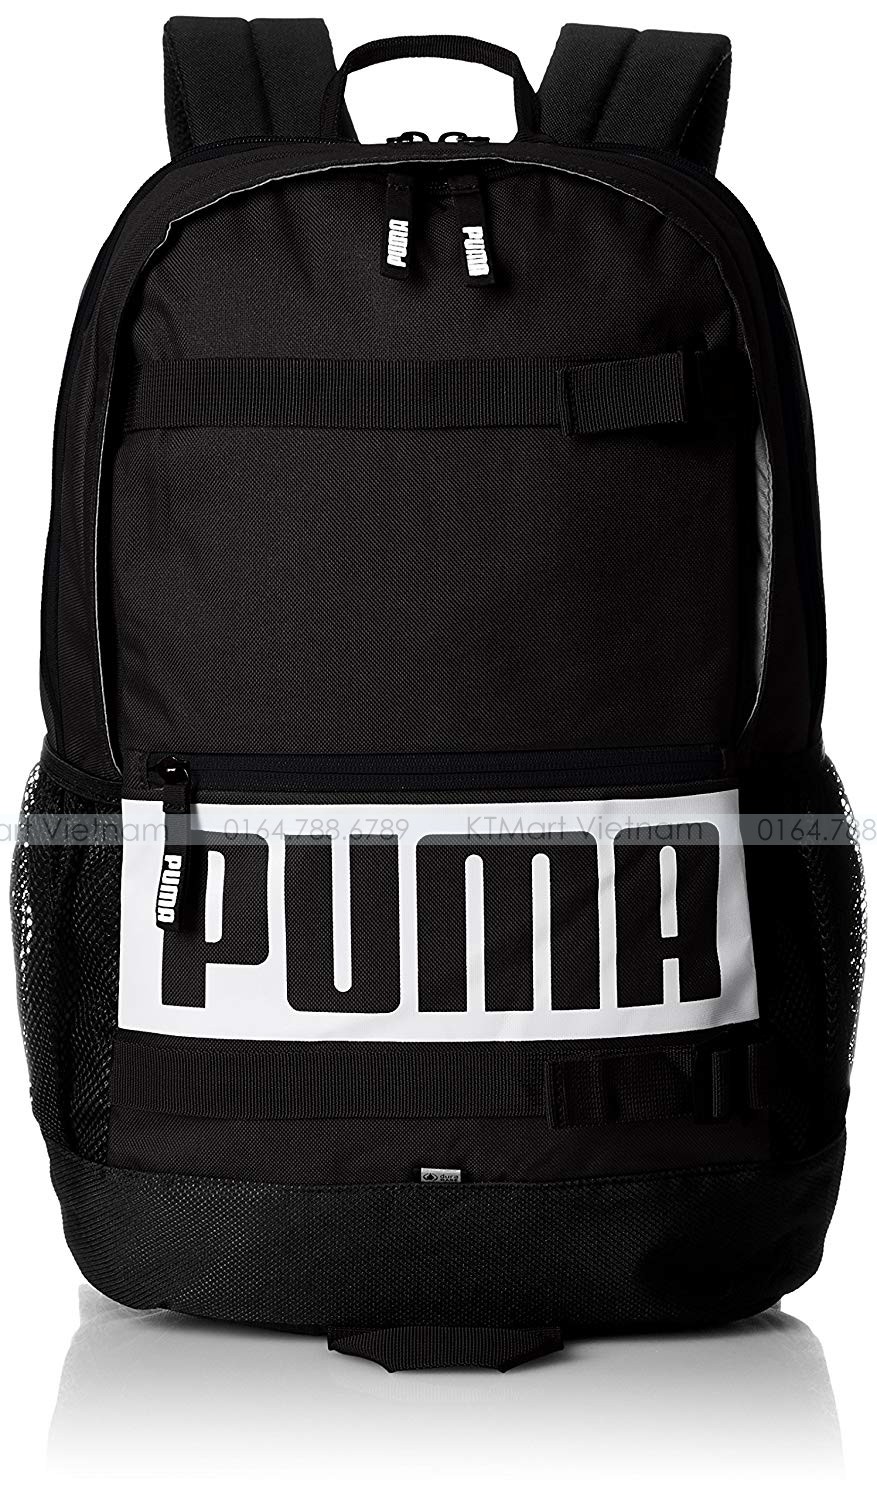 Puma Deck Backpack Puma ktmart.vn 0